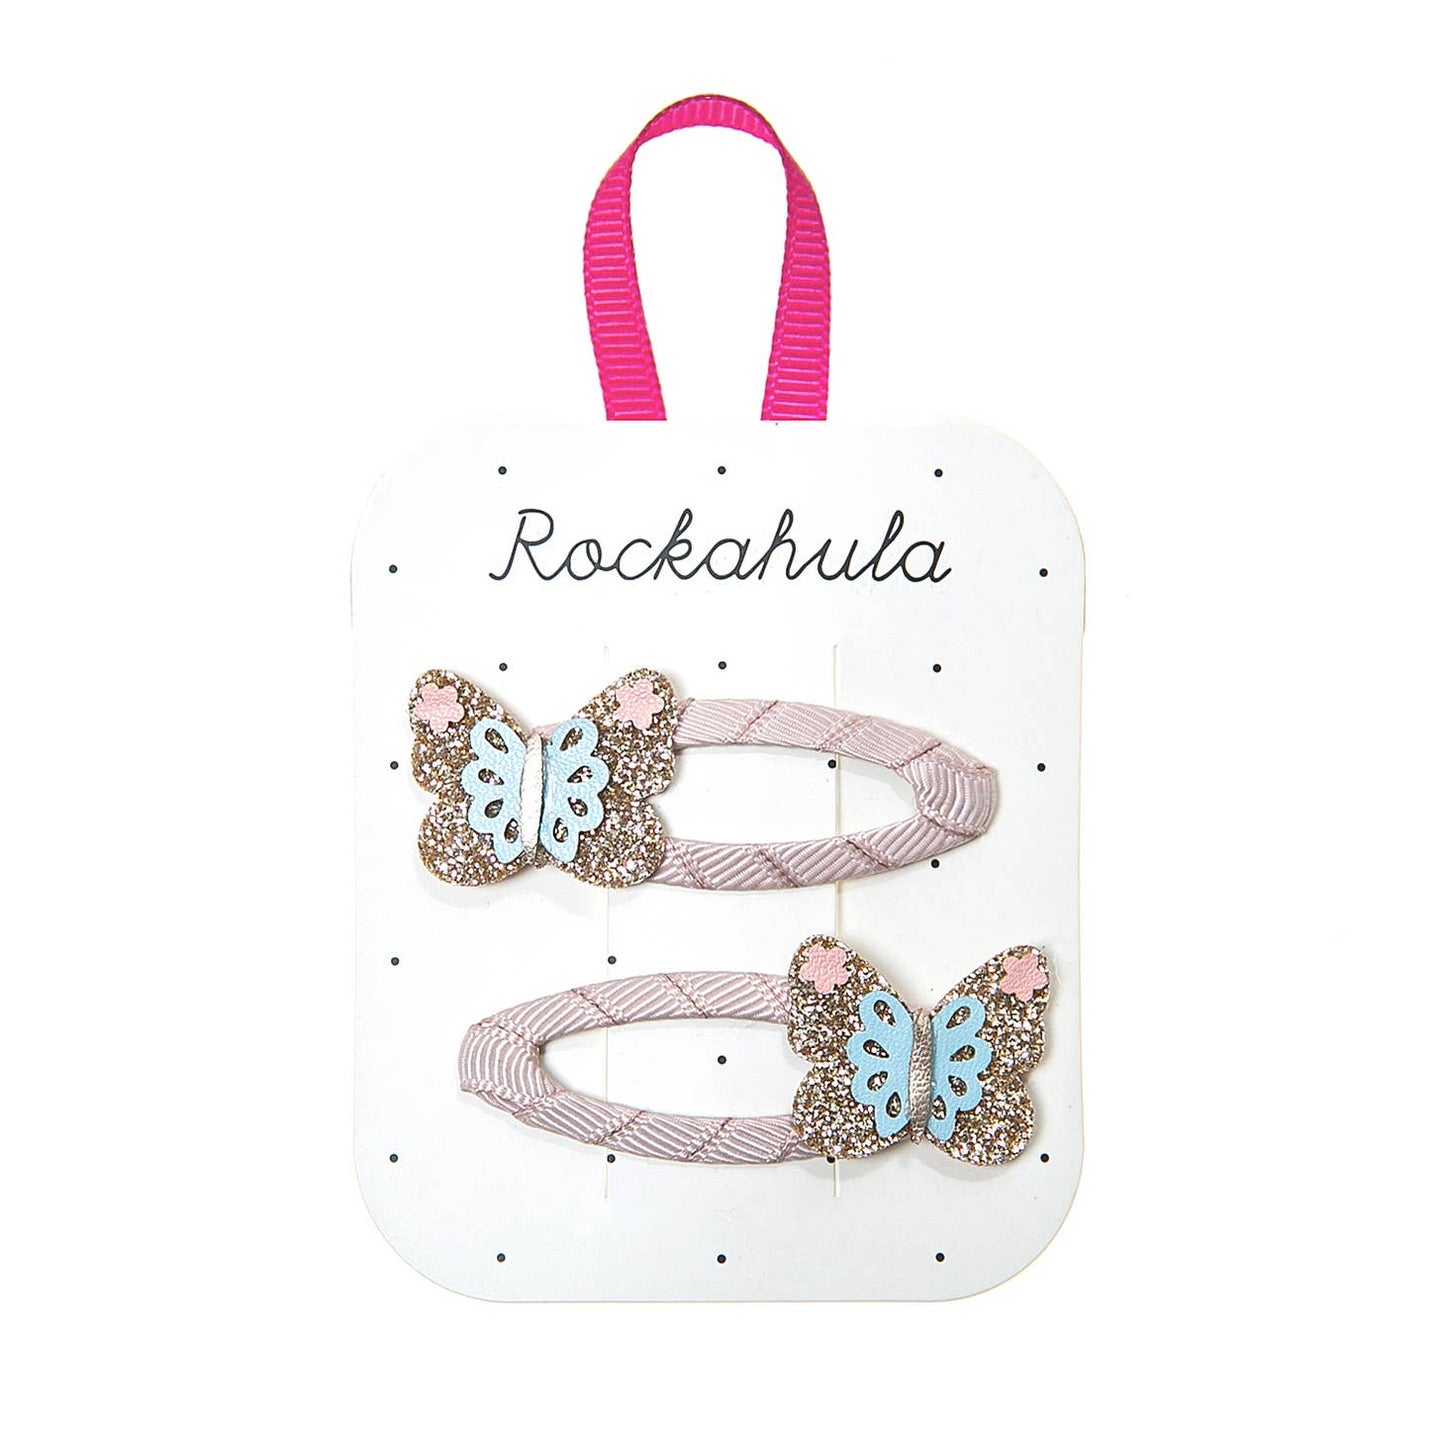 Rockahula hair clips